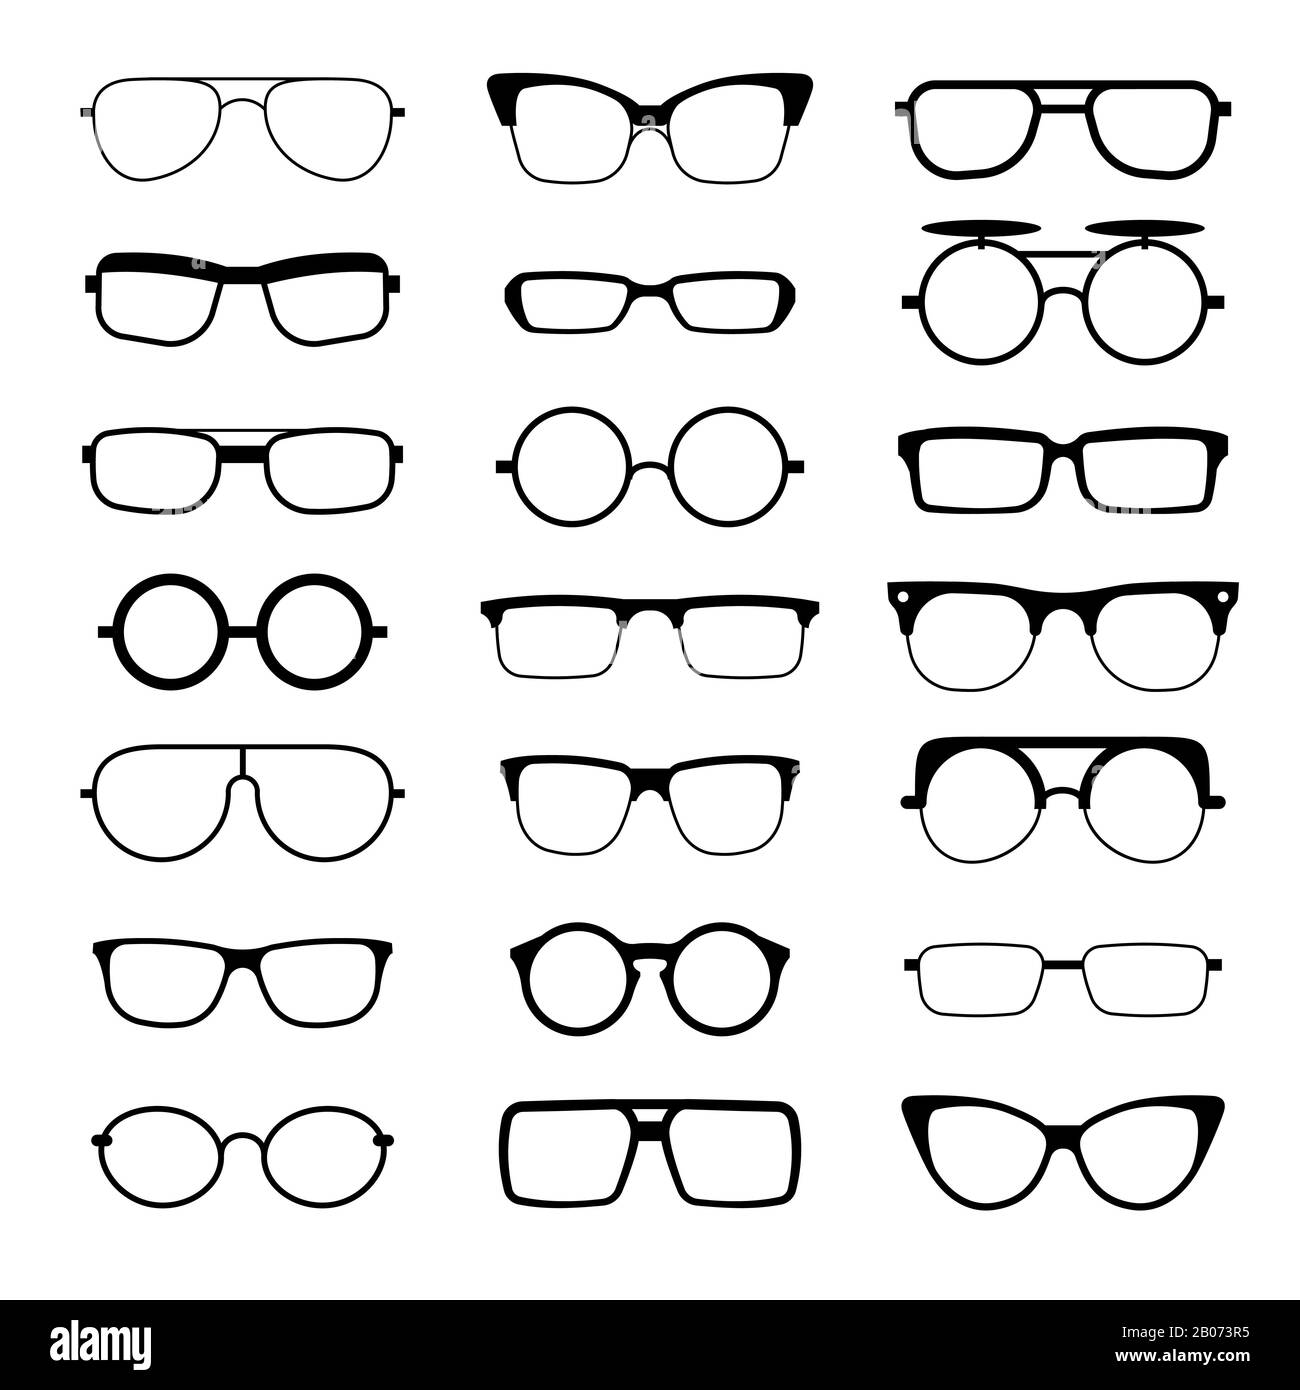 Sunglasses, eyeglasses, geek glasses different model shapes vector silhouettes icons. Fashion assortment eyewear illustration Stock Vector